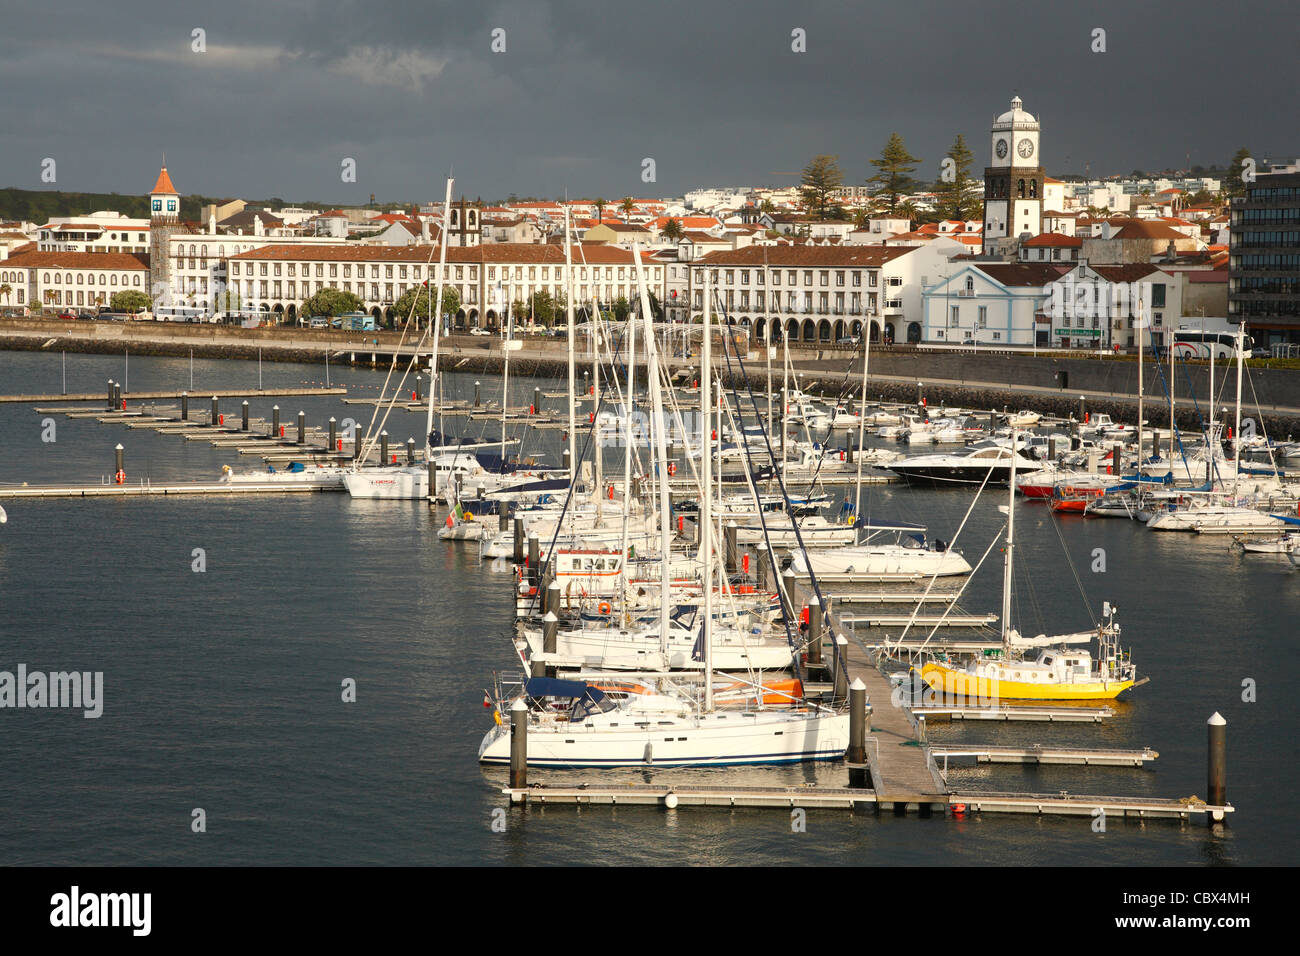 The city of Ponta Delgada. Sao Miguel island, Azores islands, Portugal. Stock Photo